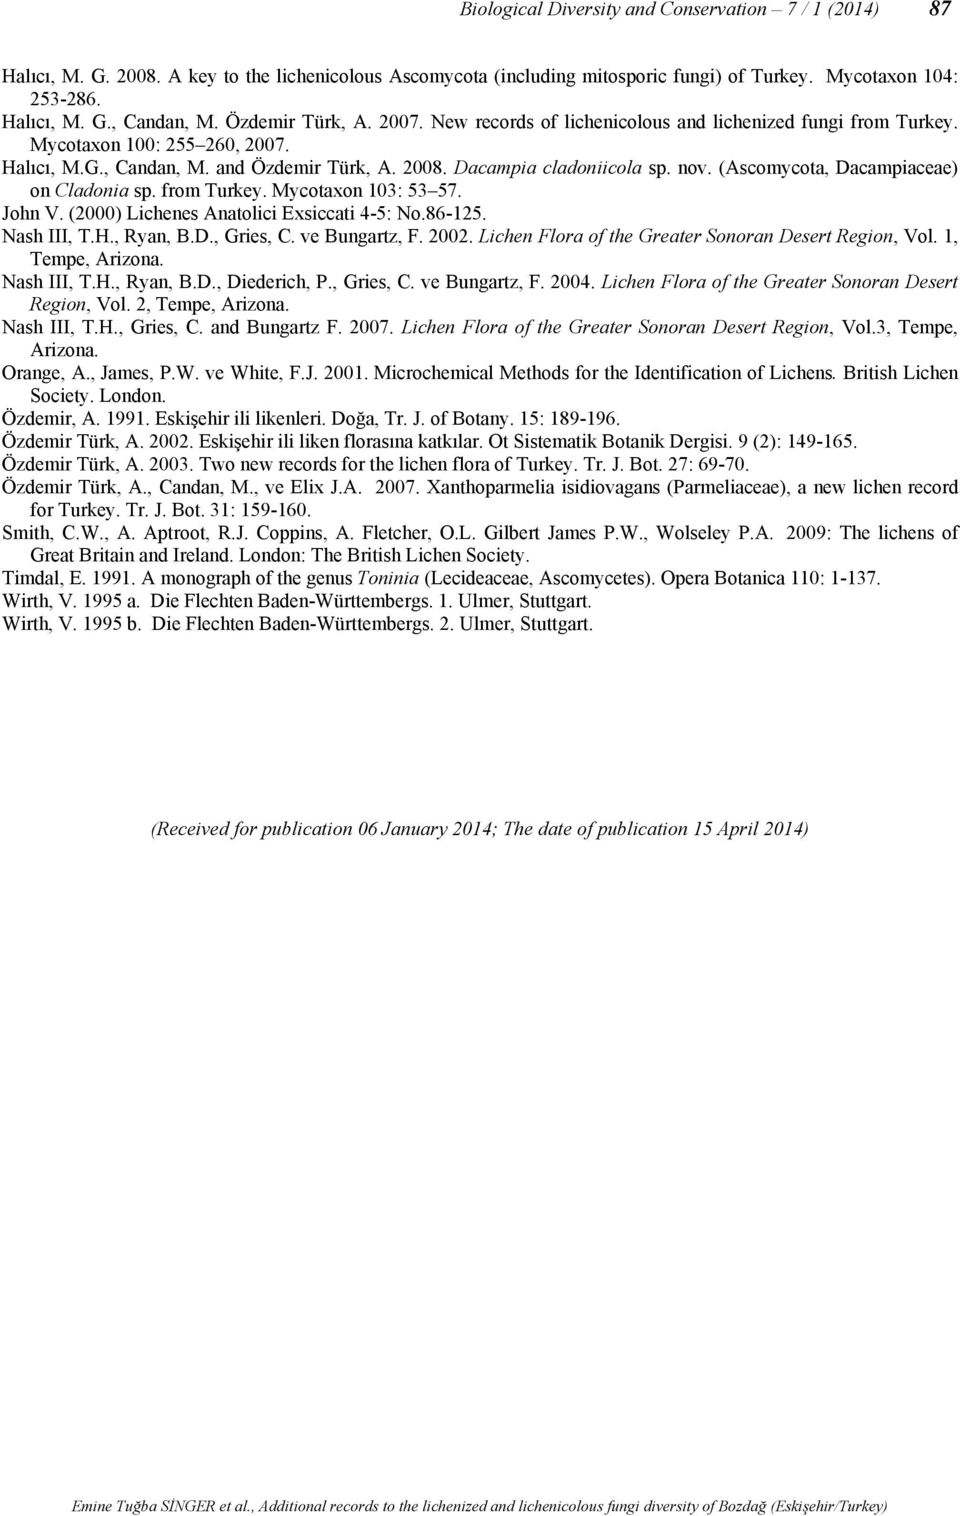 (Ascomycota, Dacampiaceae) on Cladonia sp. from Turkey. Mycotaxon 103: 53 57. John V. (2000) Lichenes Anatolici Exsiccati 4-5: No.86-125. Nash III, T.H., Ryan, B.D., Gries, C. ve Bungartz, F. 2002.